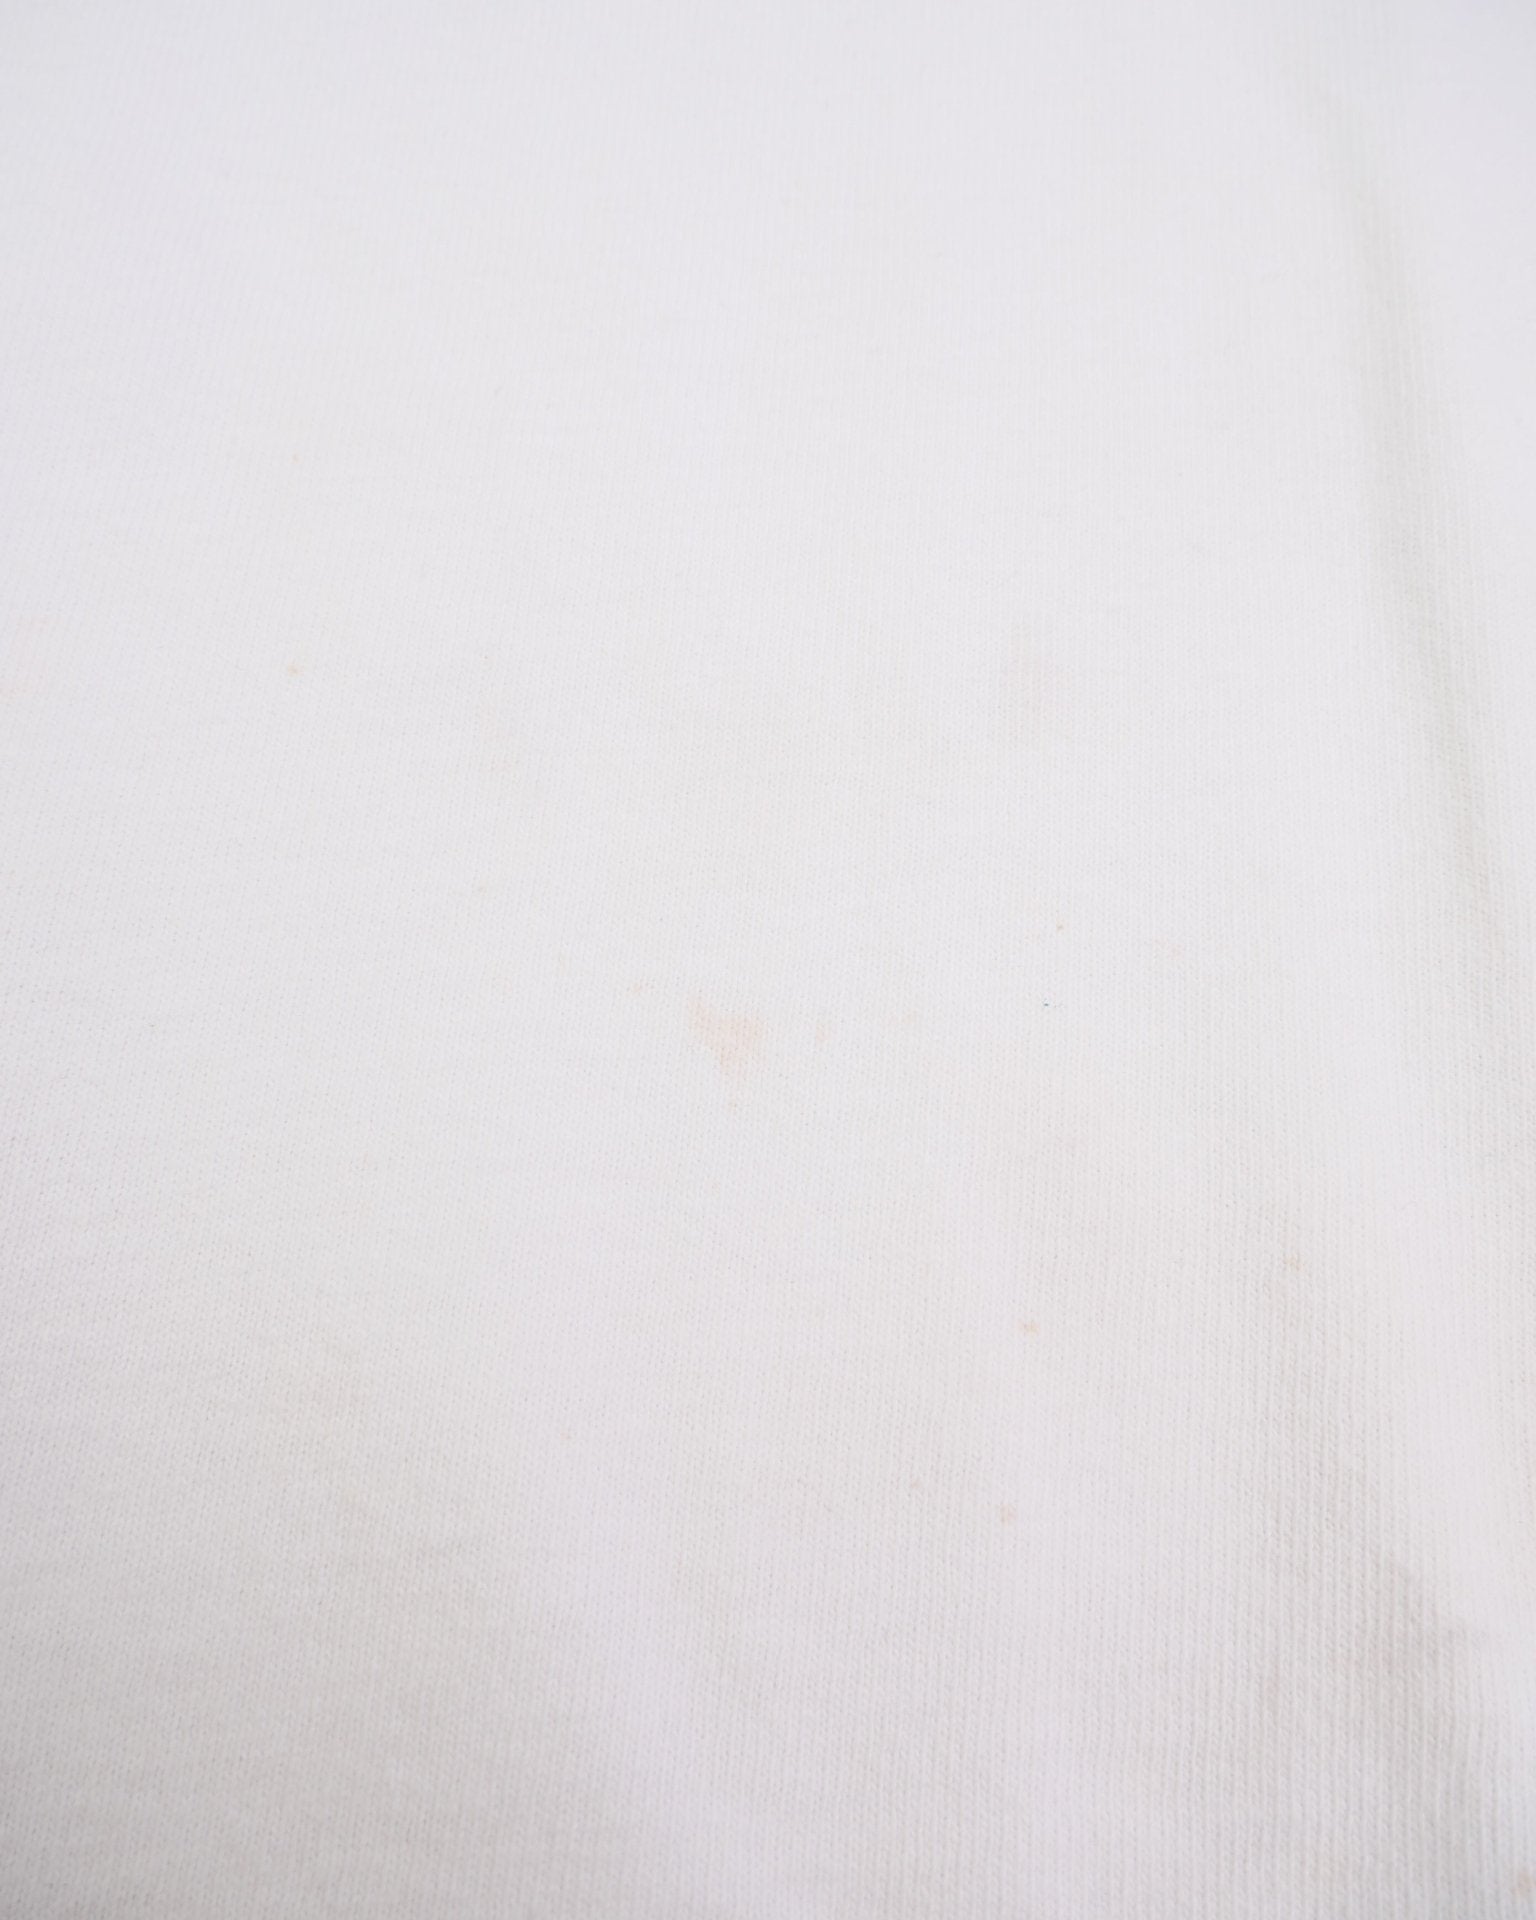 Champion Vintage USA embroidered Logo white Tank Top Shirt - Peeces